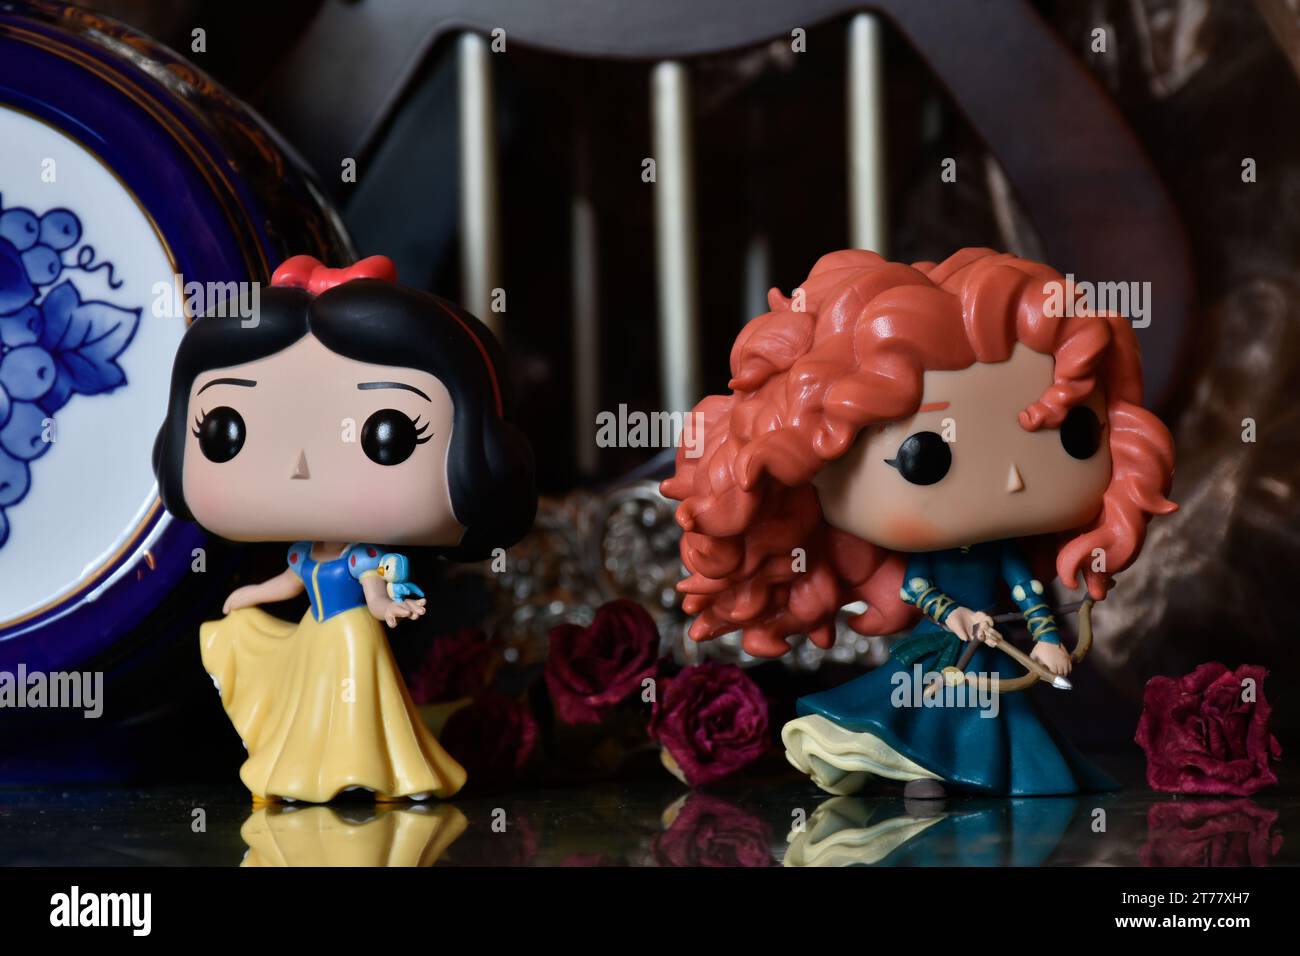 Funko Pop action figures of Disney princesses Snow White and Merida (Brave). Medieval castle, fabulous kingdom, red roses, porcelain blue keg. Stock Photo